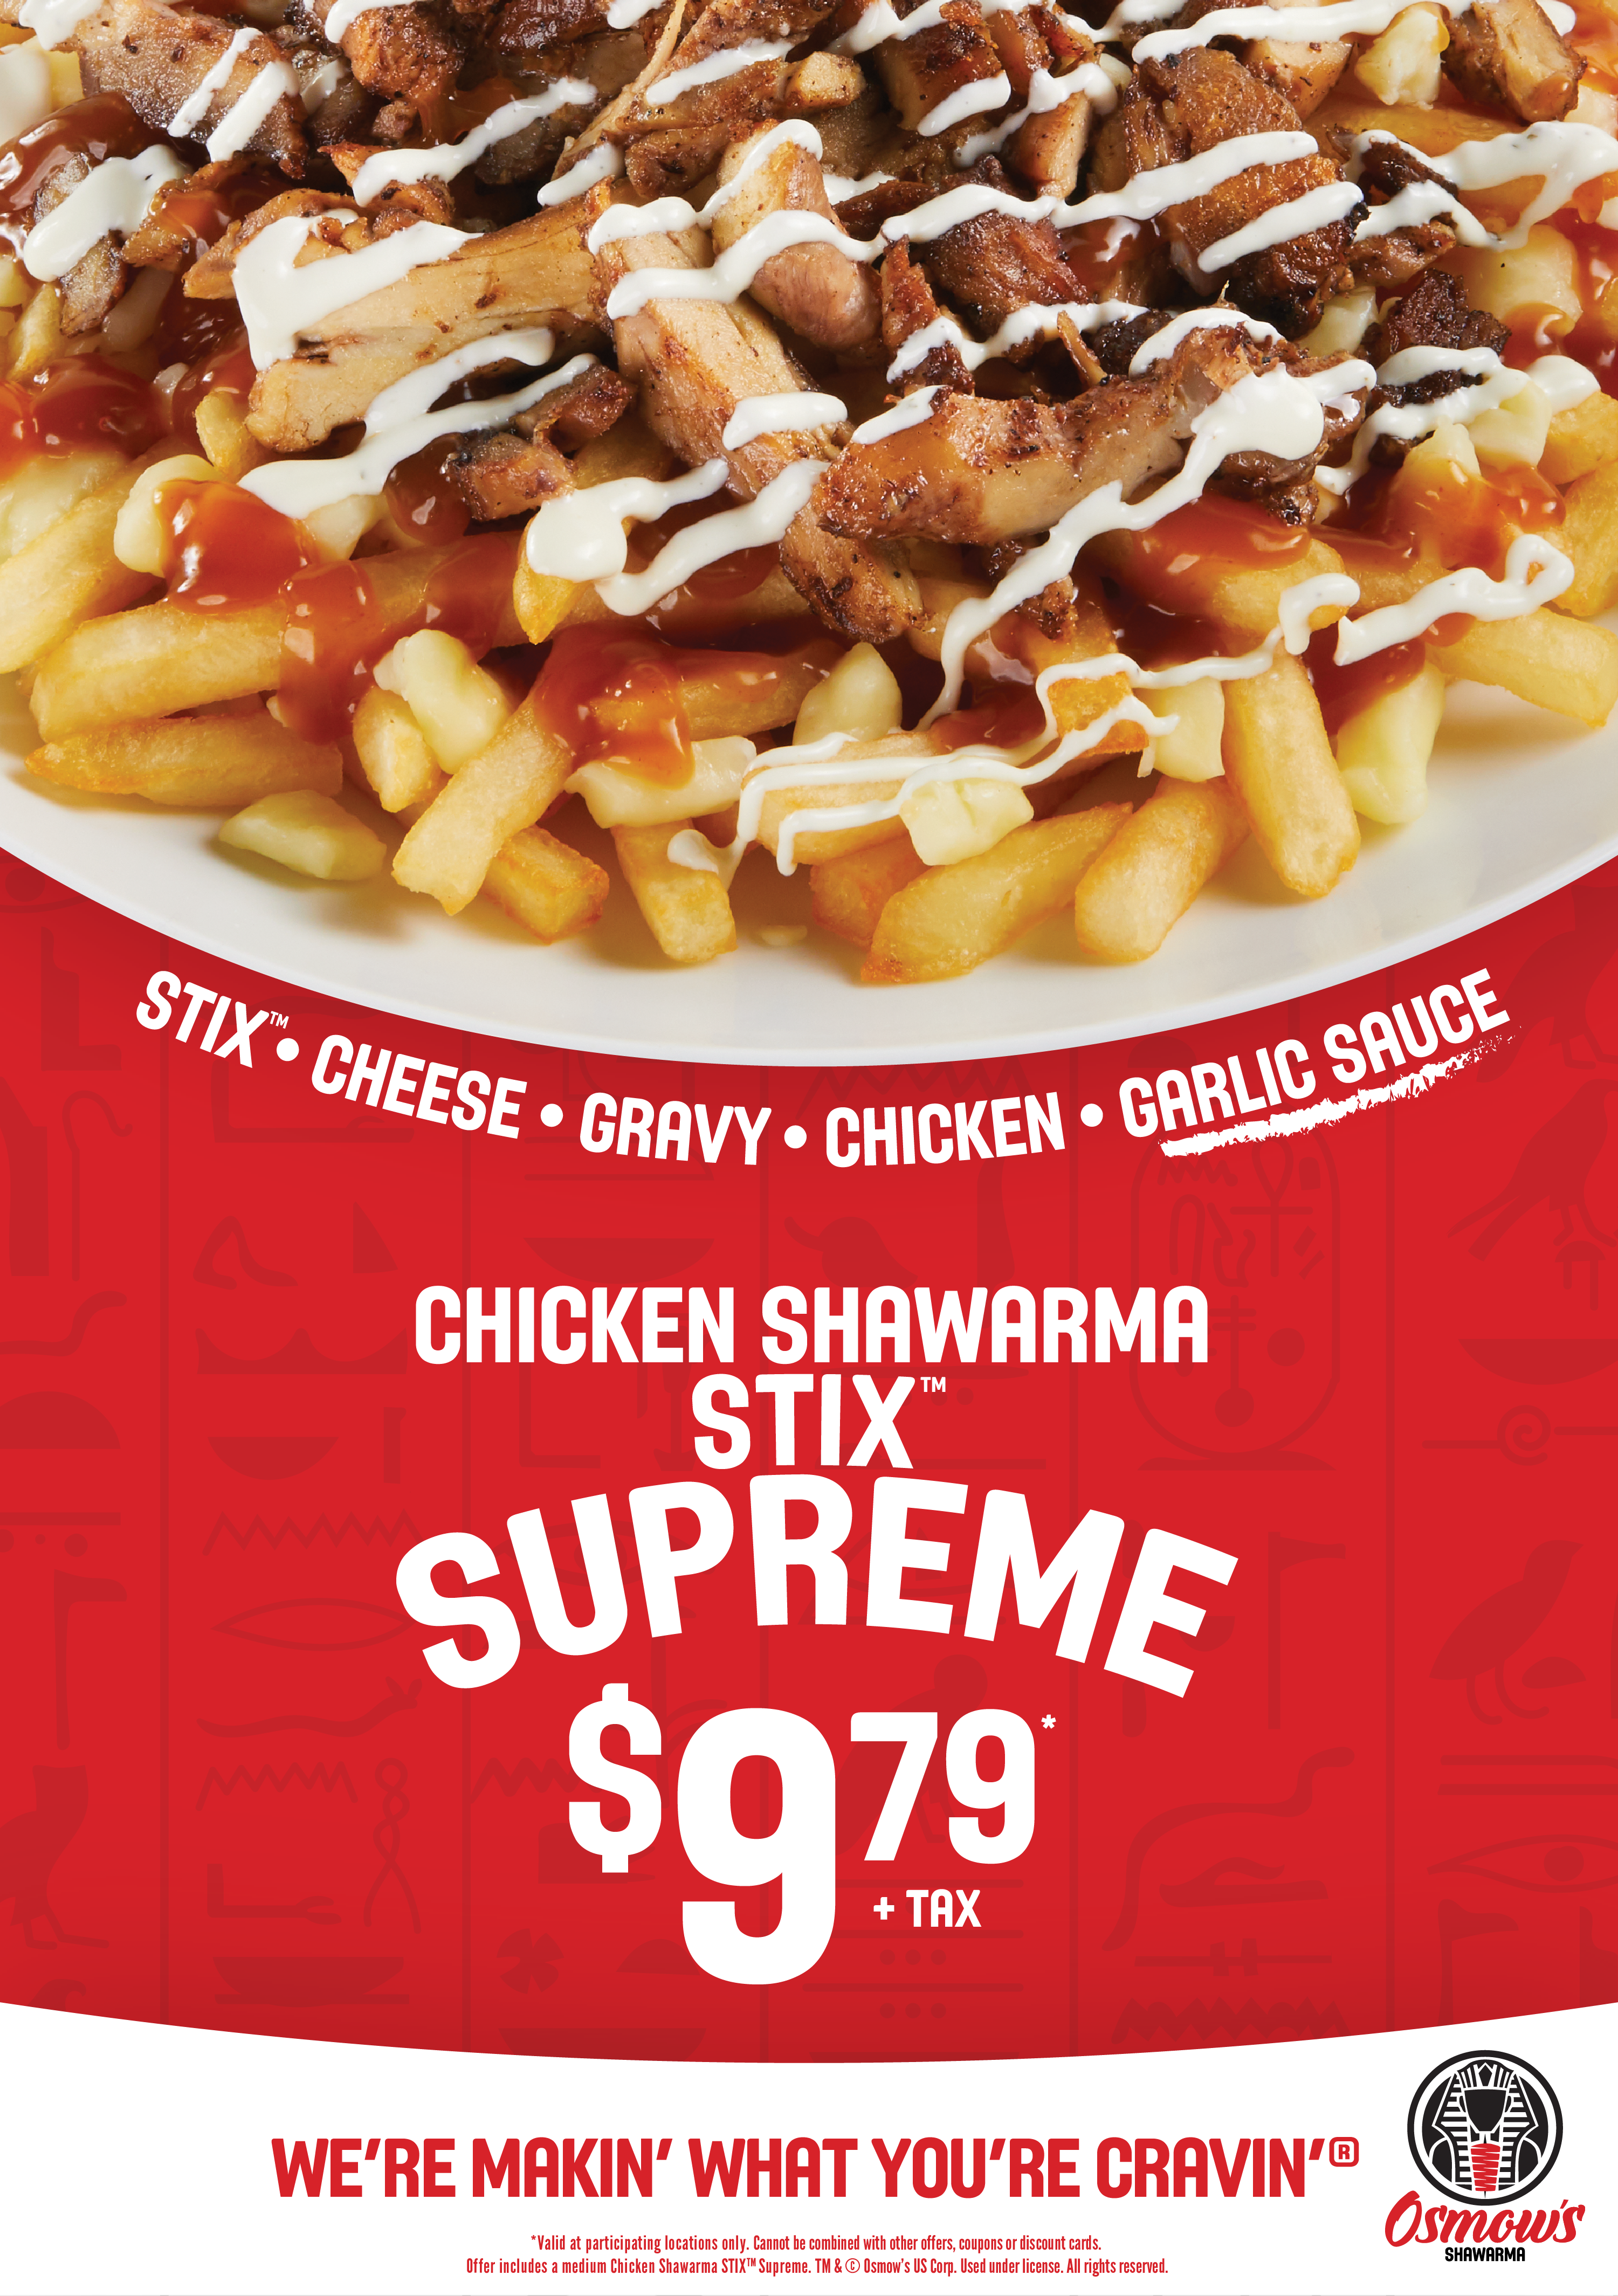 Chicken Shawarma STIX Supreme - $9.79 + tax offer